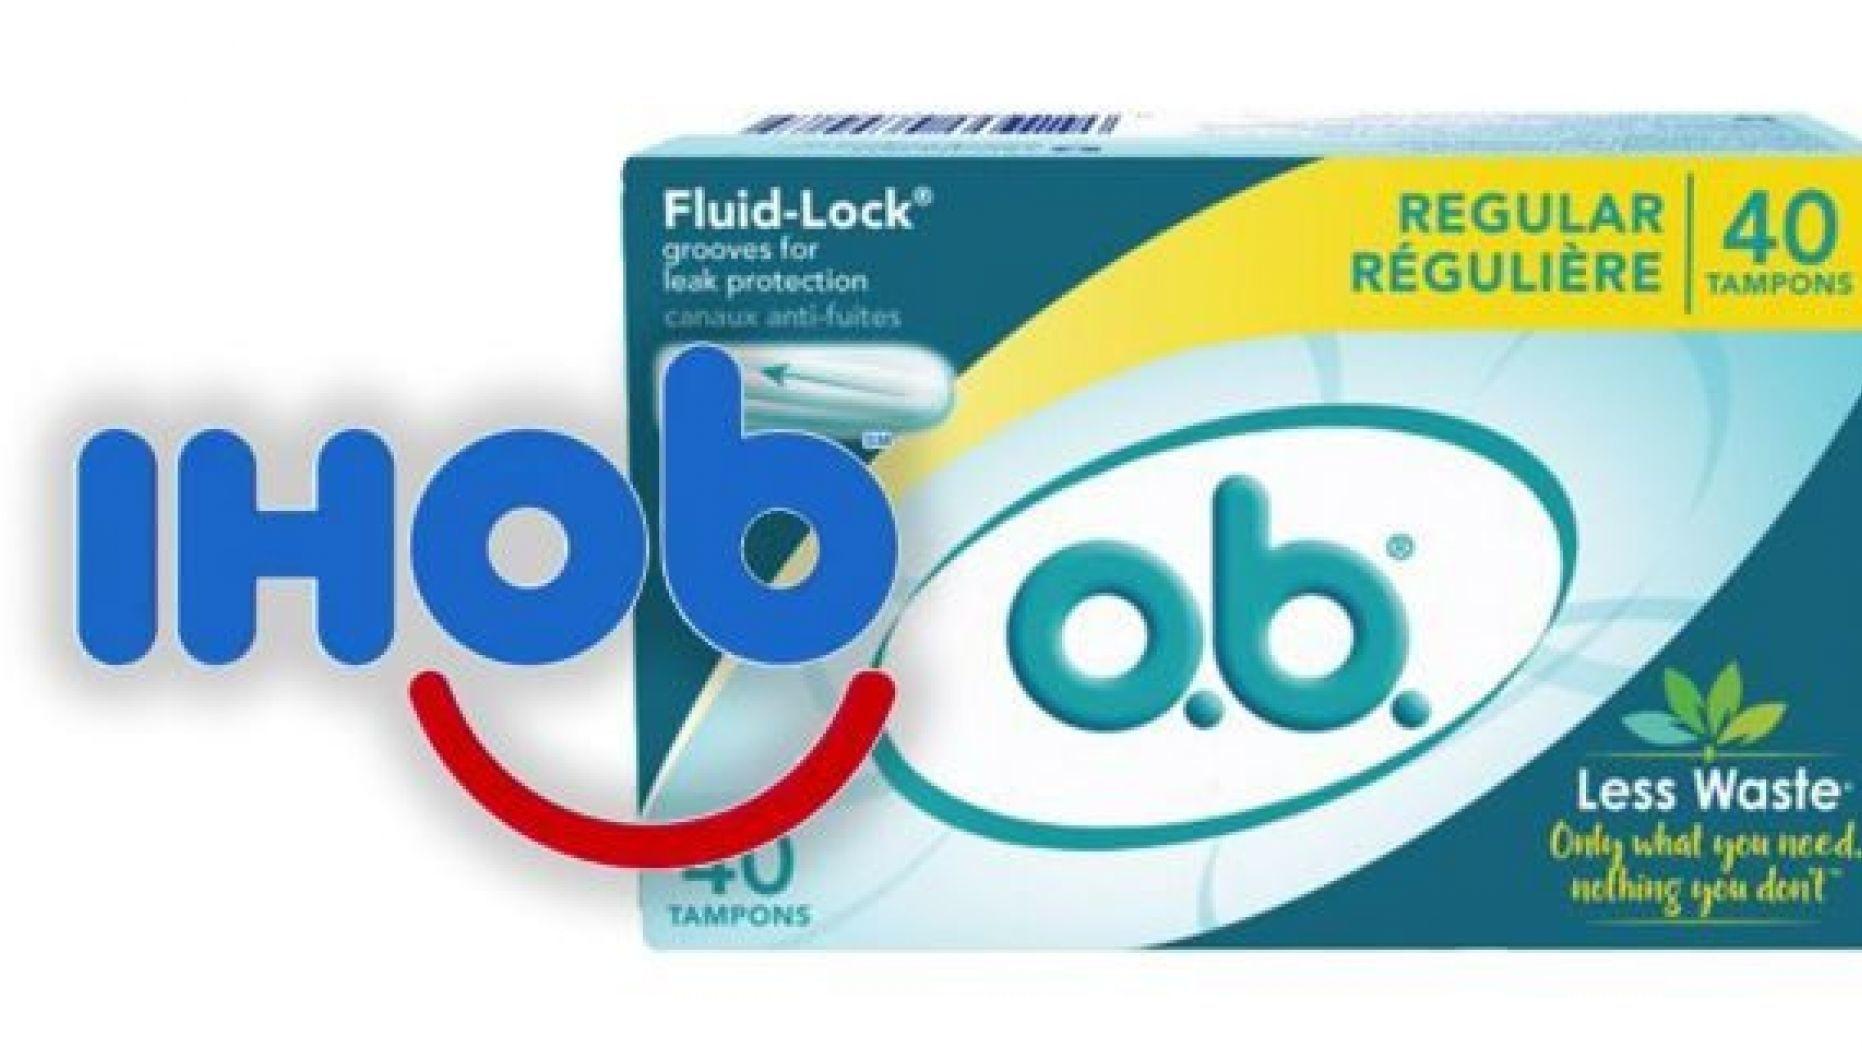 Ihob Logo - IHOP's new logo looks eerily similar to o.b. tampon brand's, social